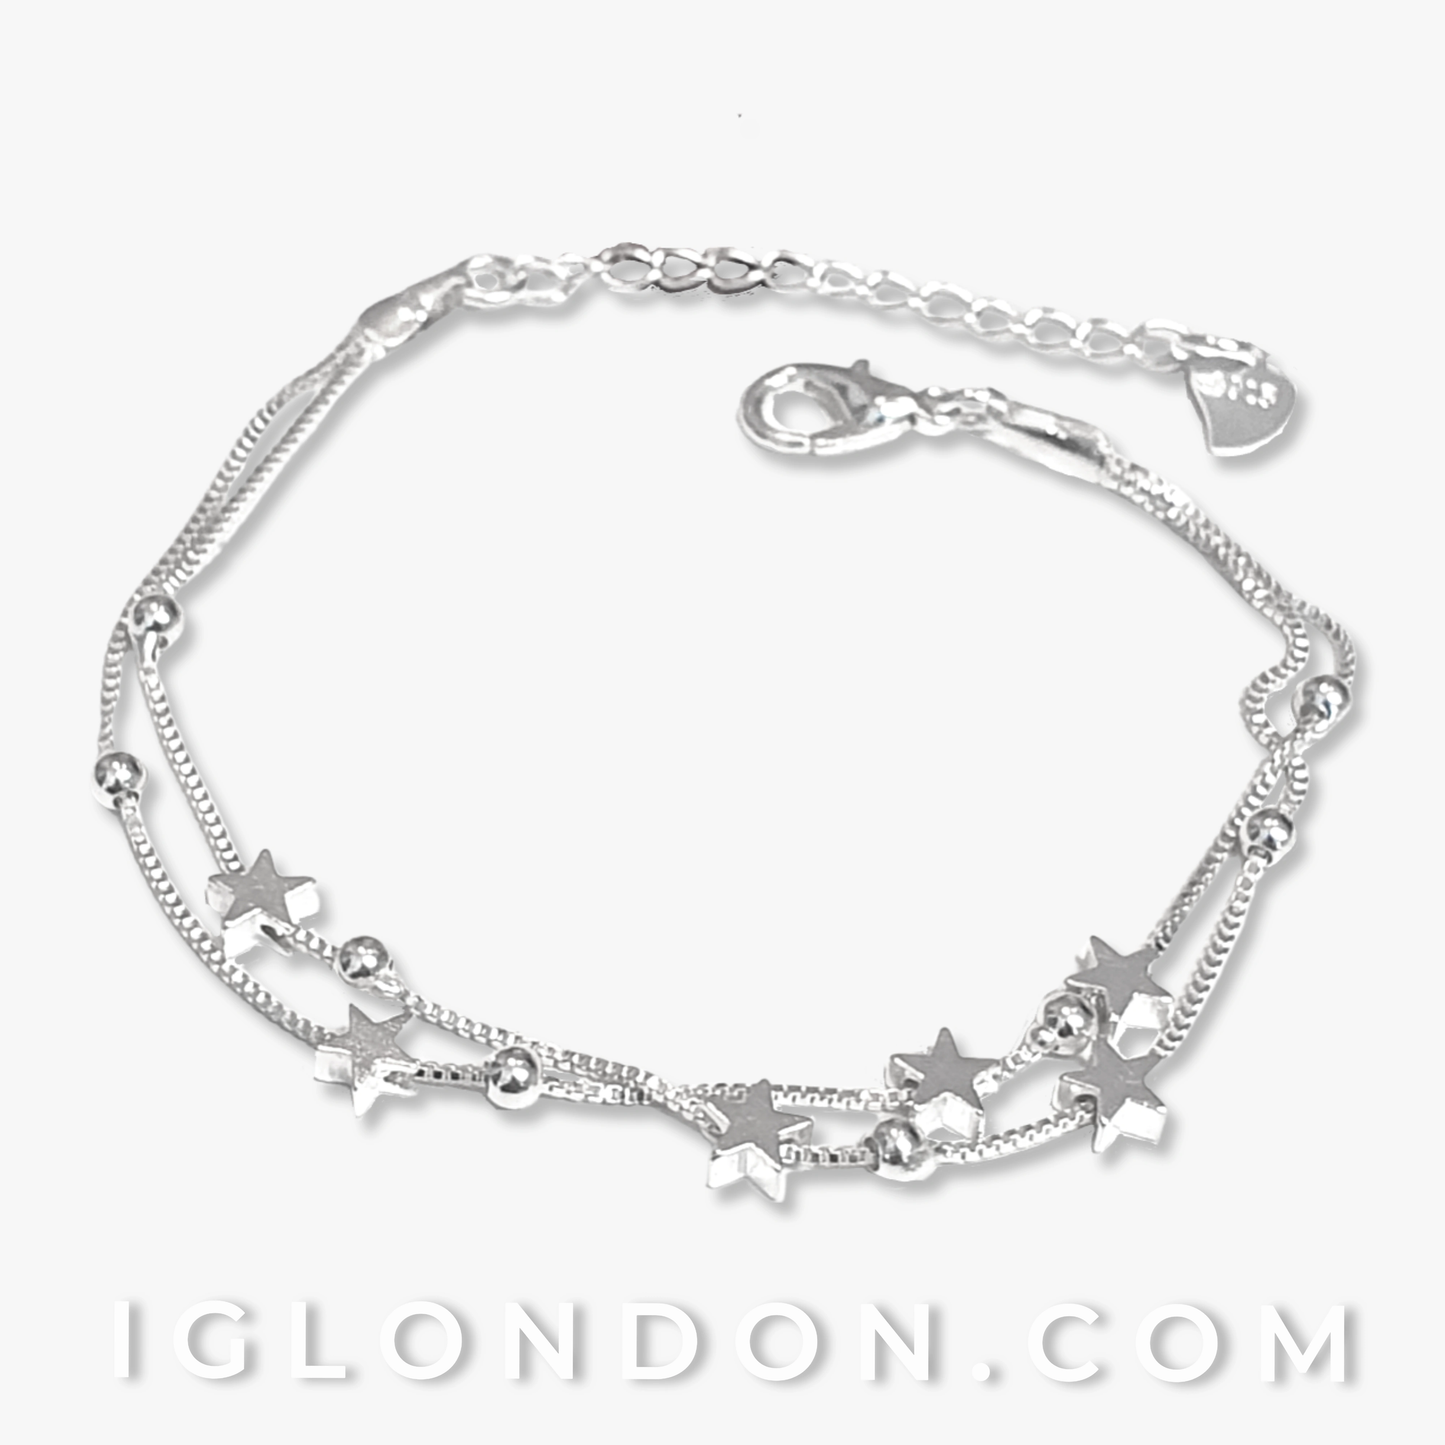 stars bracelet moons e stars box chain bracelet sterling silver filled - IGLondon.com IGLondon.com, 